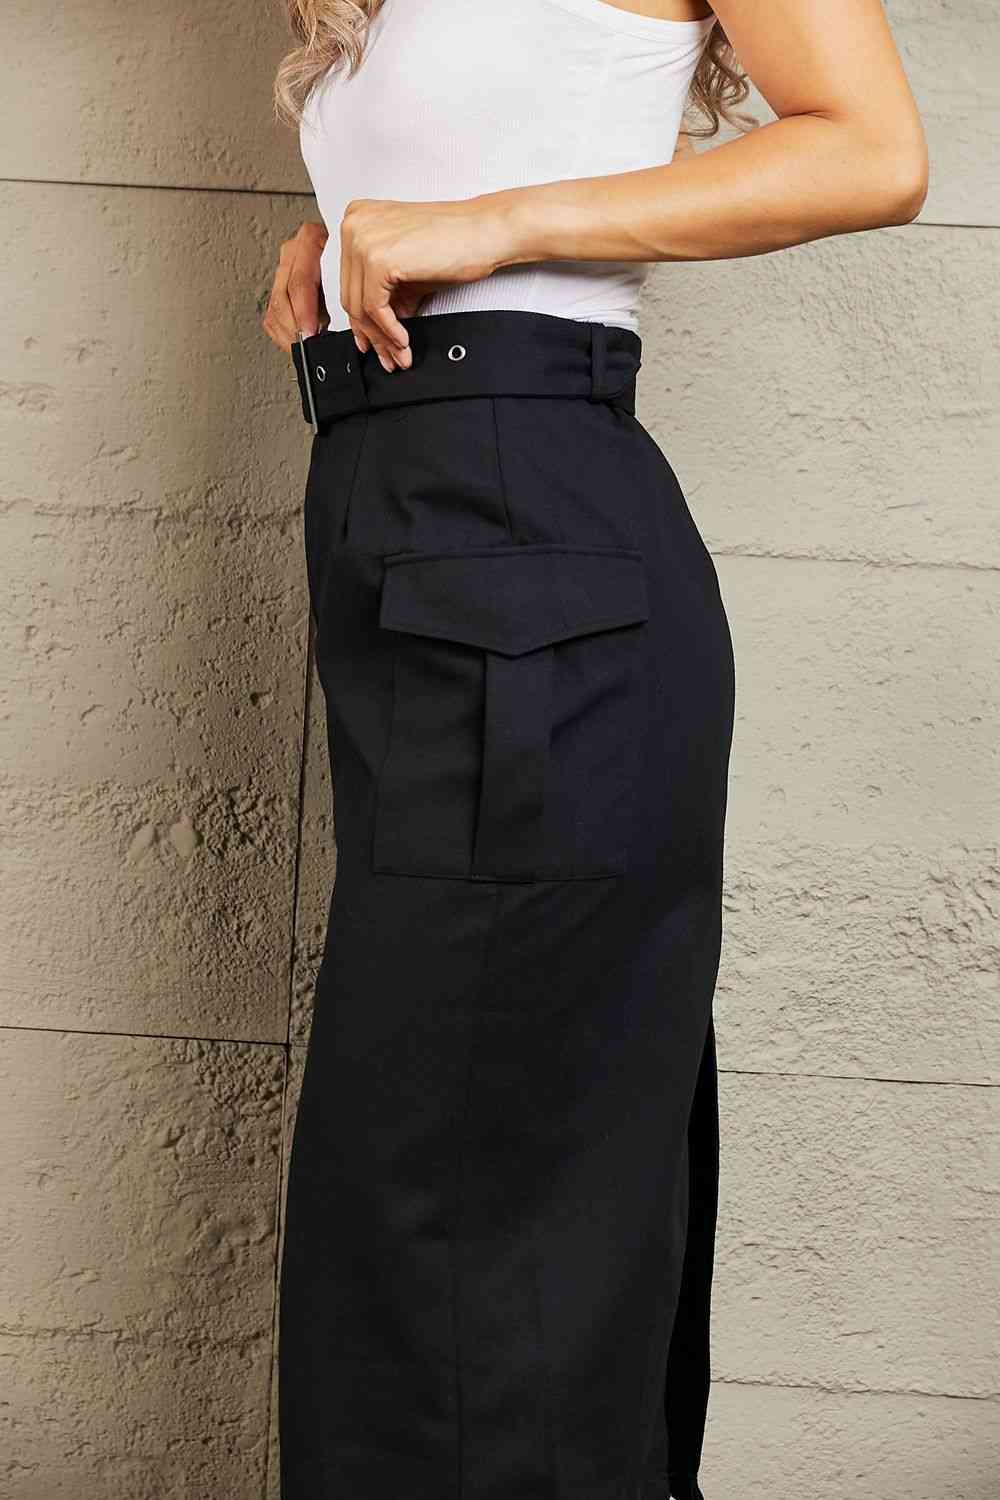 Buckled Black Maxi Skirt